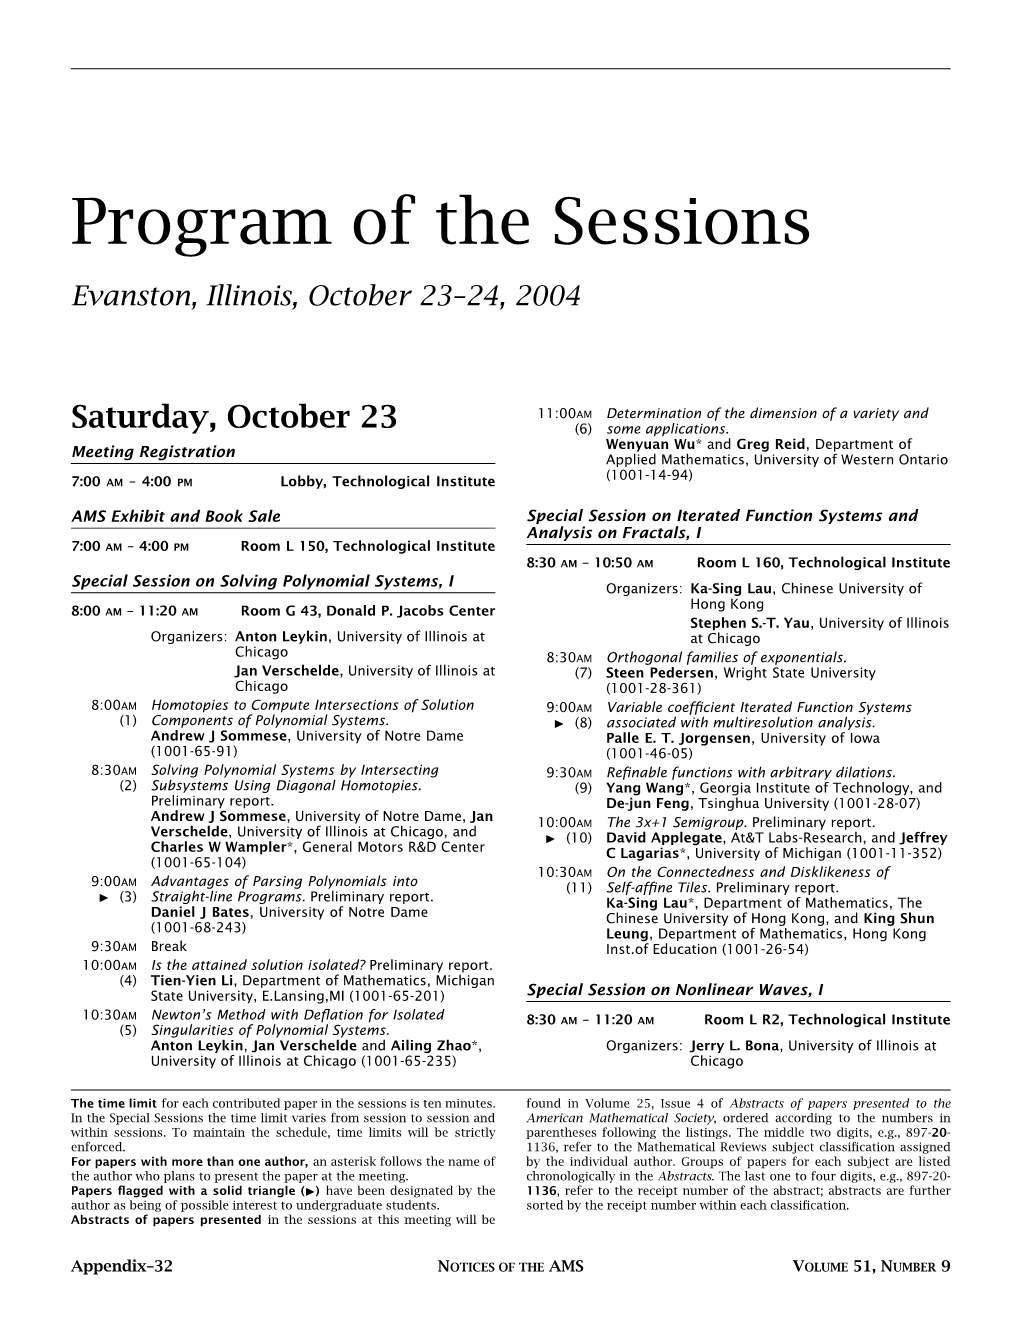 Program of the Sessions, Evanston, Volume 51, Number 9